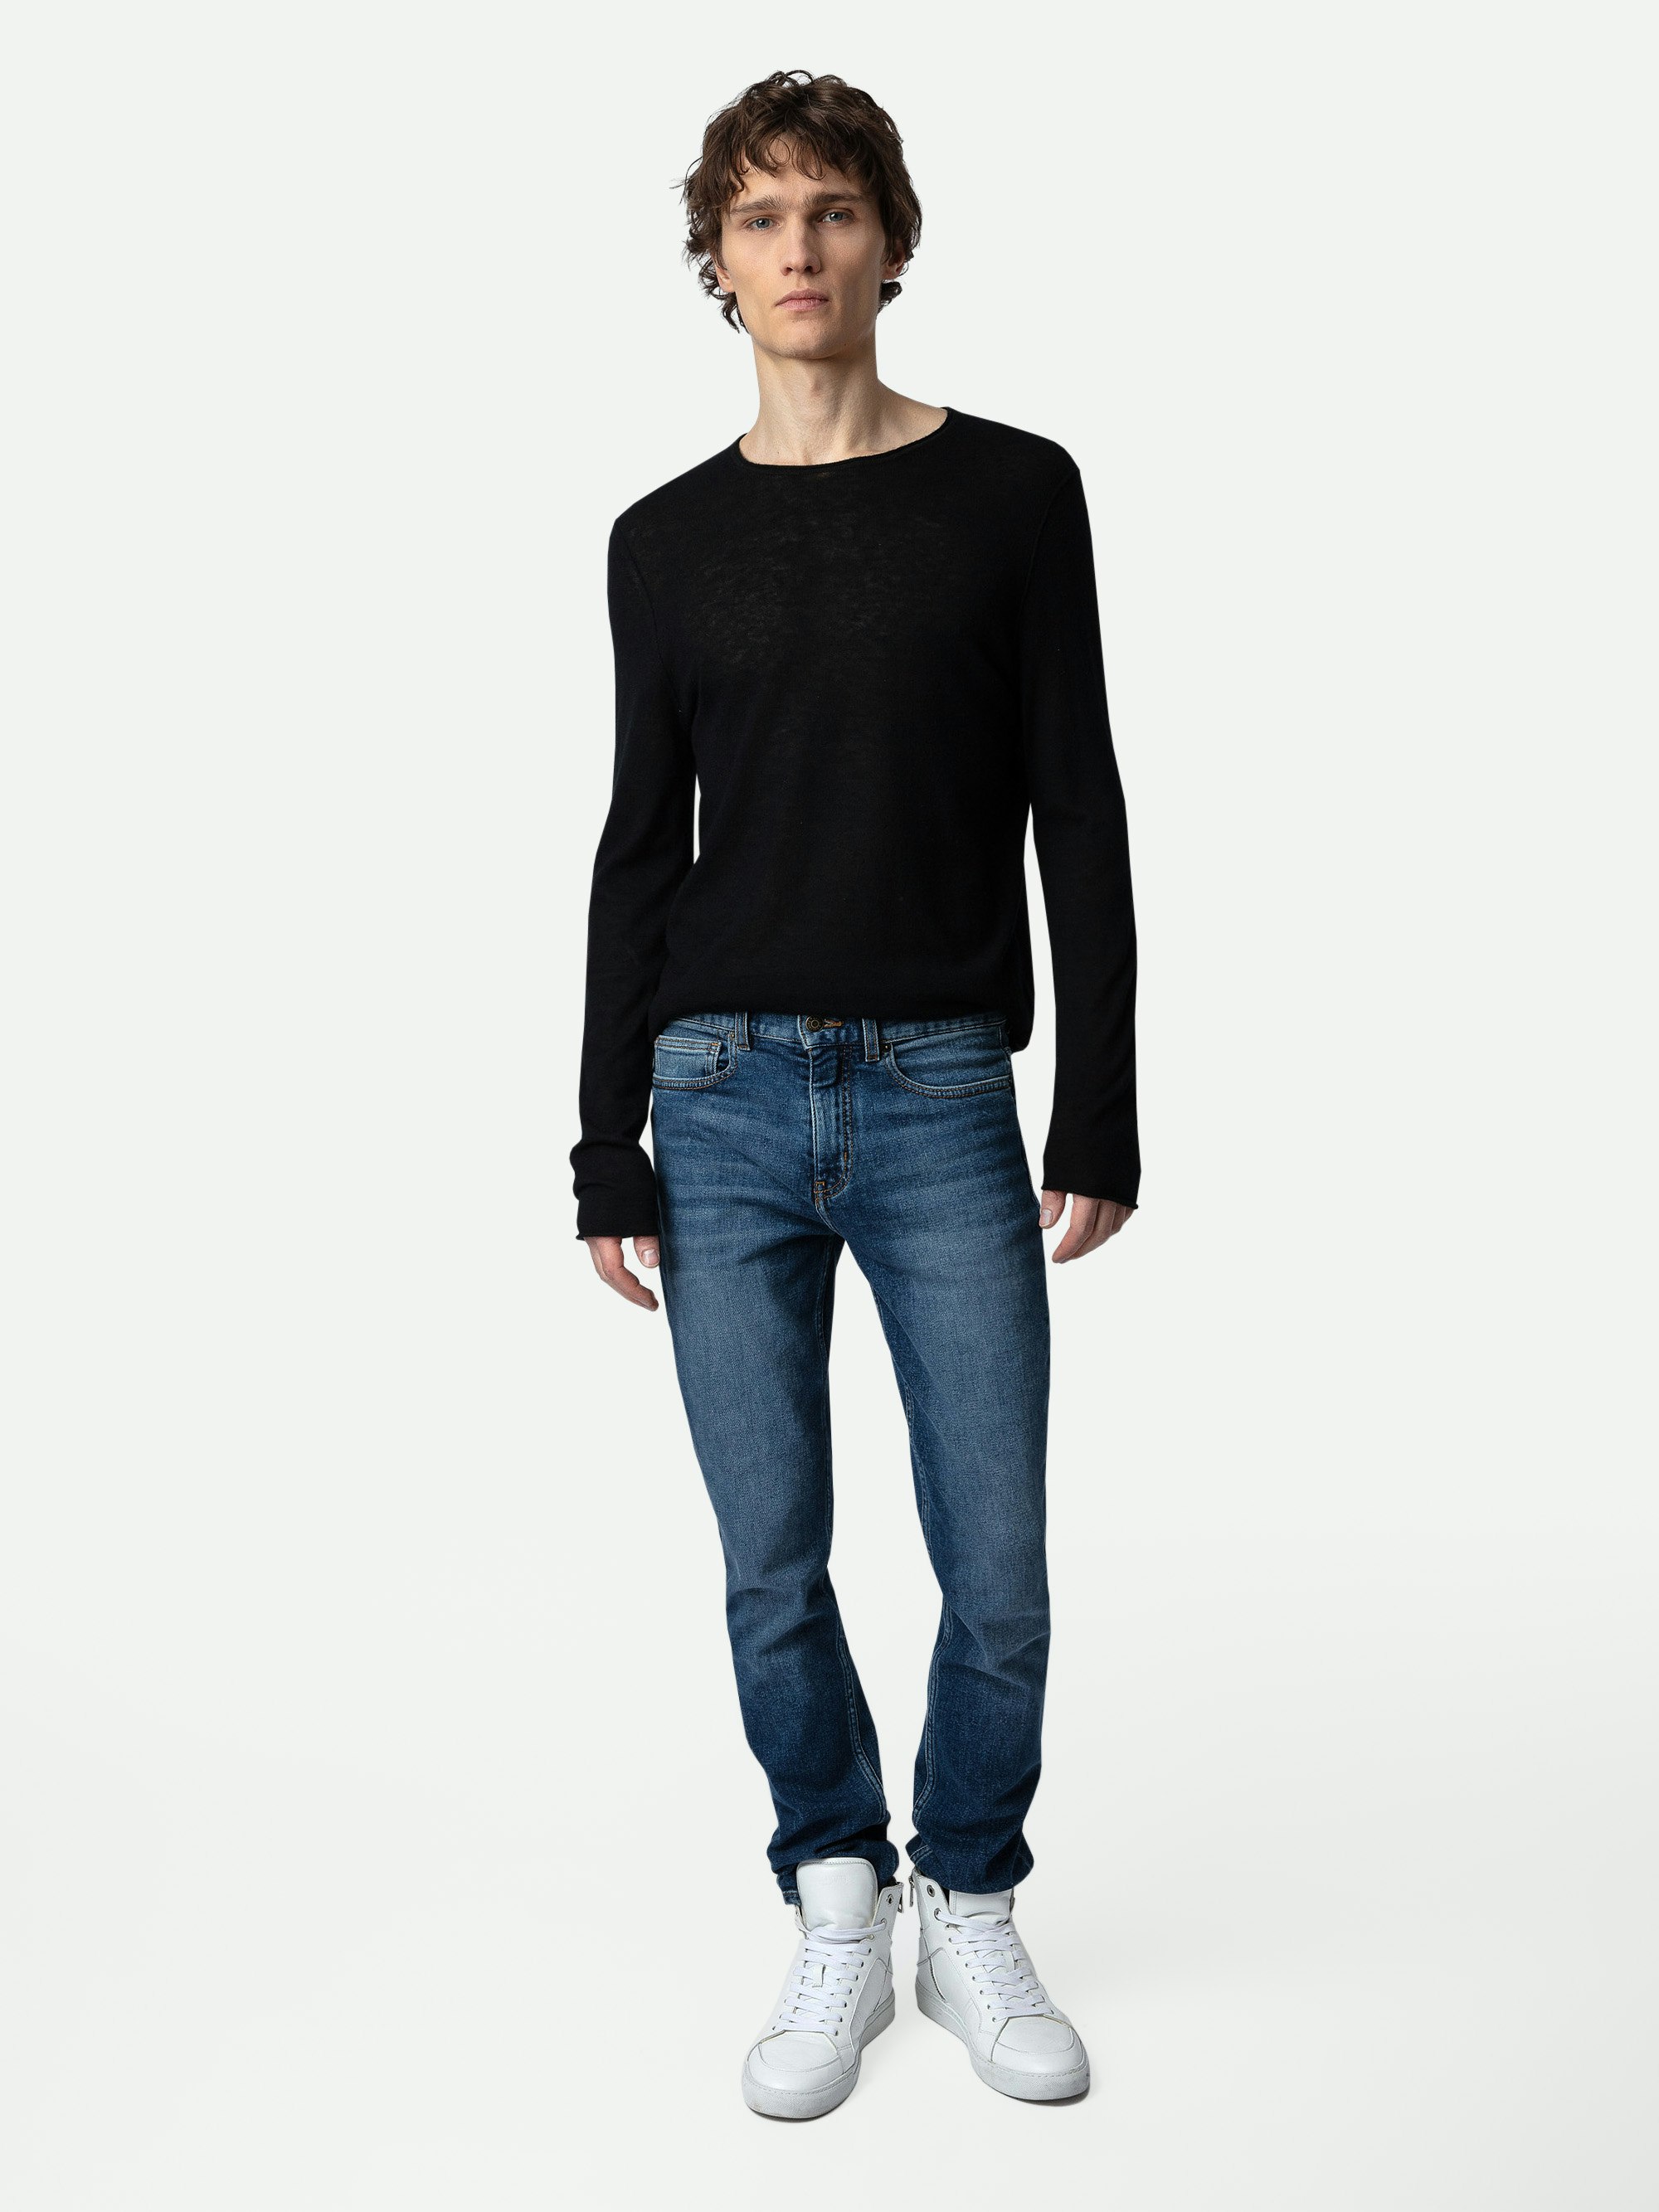 Teiss Cachemire Sweater sweater black men | Zadig&Voltaire